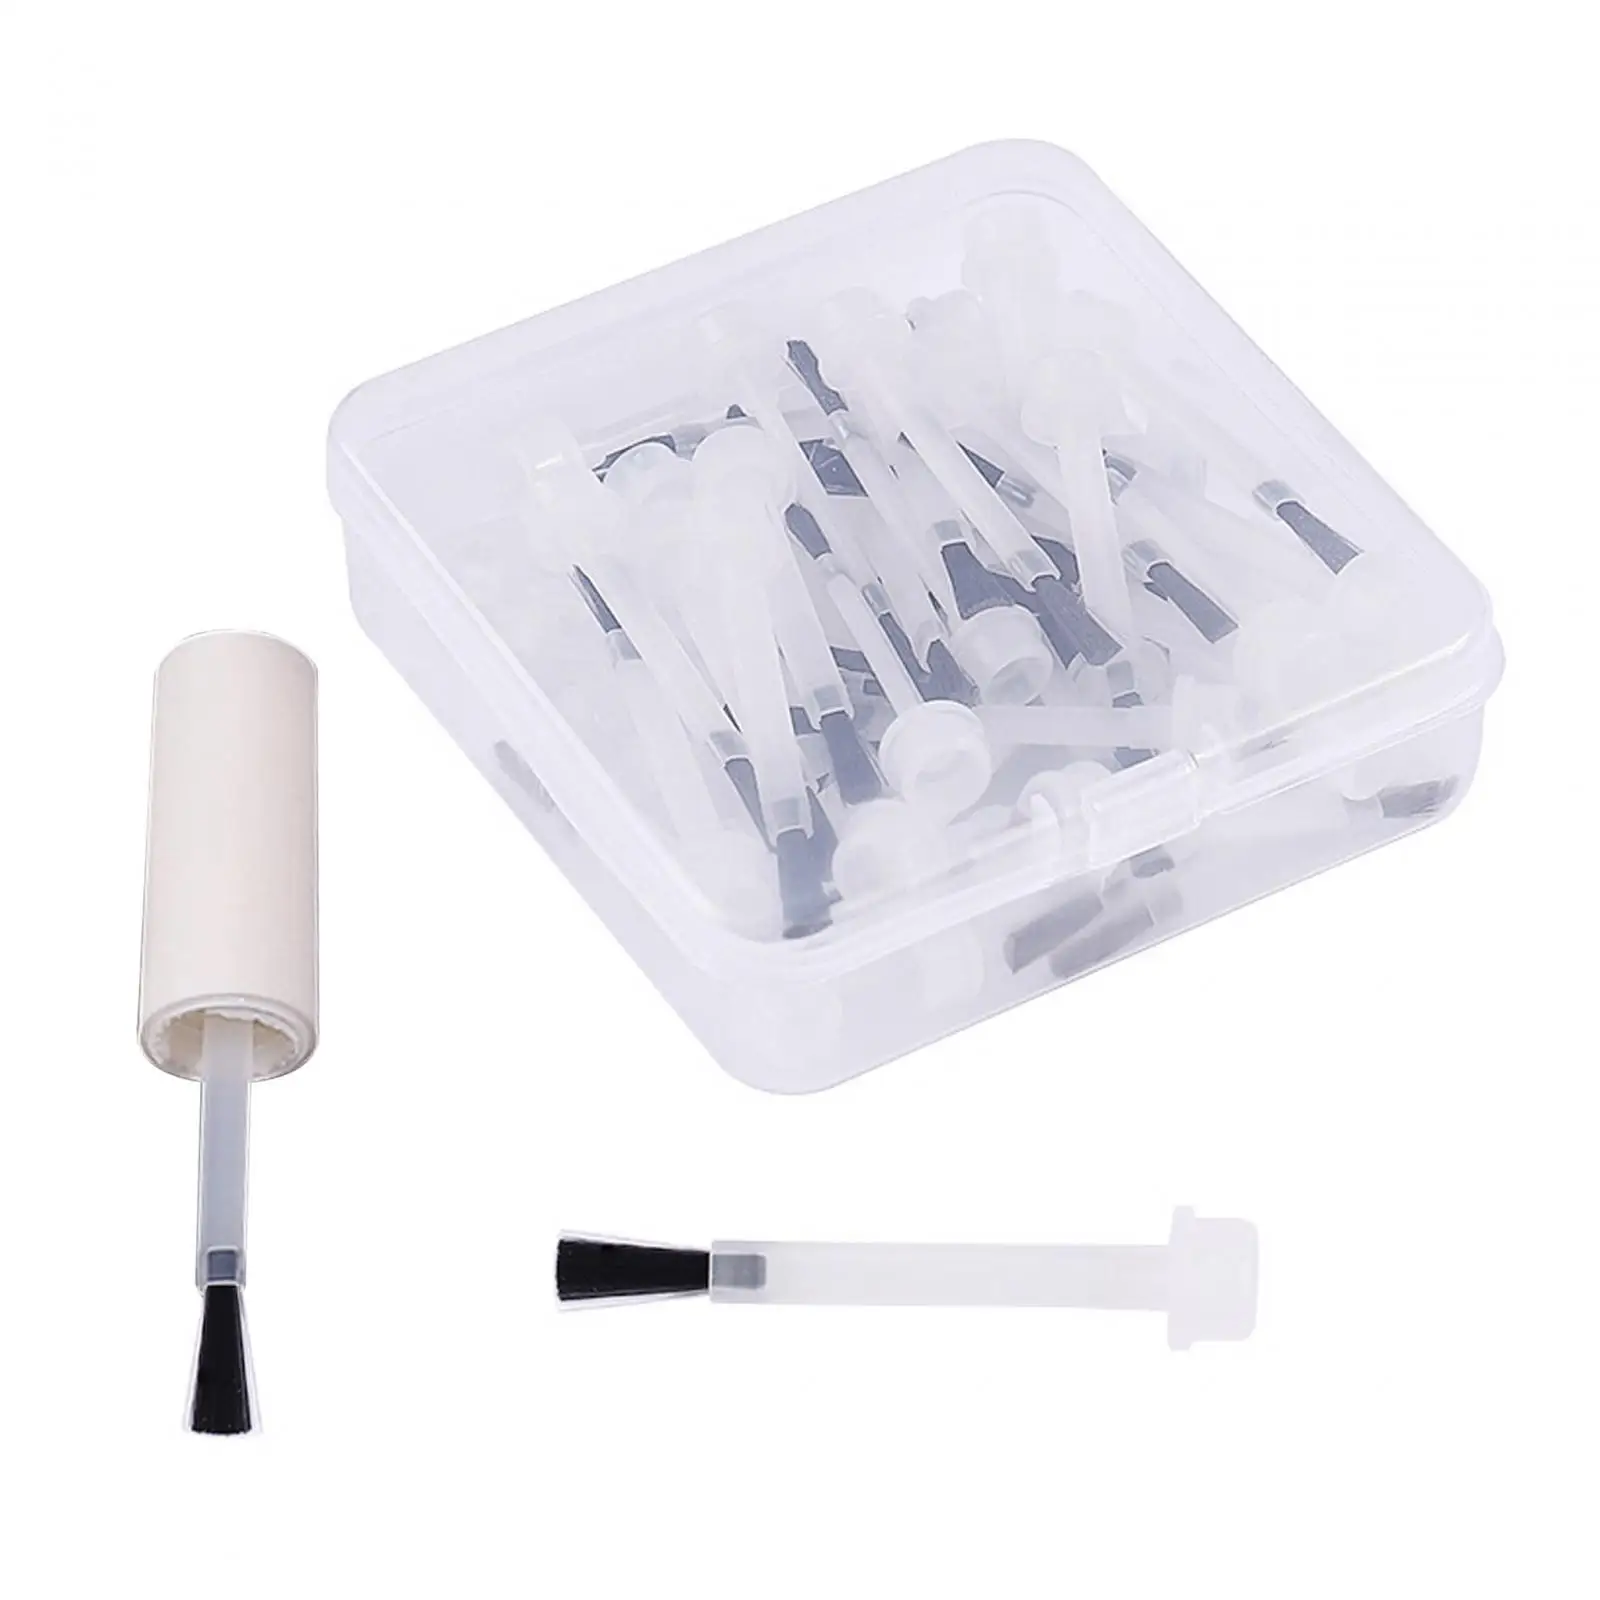 50x Nail Polish Brush Liquid Applicators Brush 5.5x1.2cm Manicure Tools for Salon Home Easily to Use Universal Nail Gel Brush